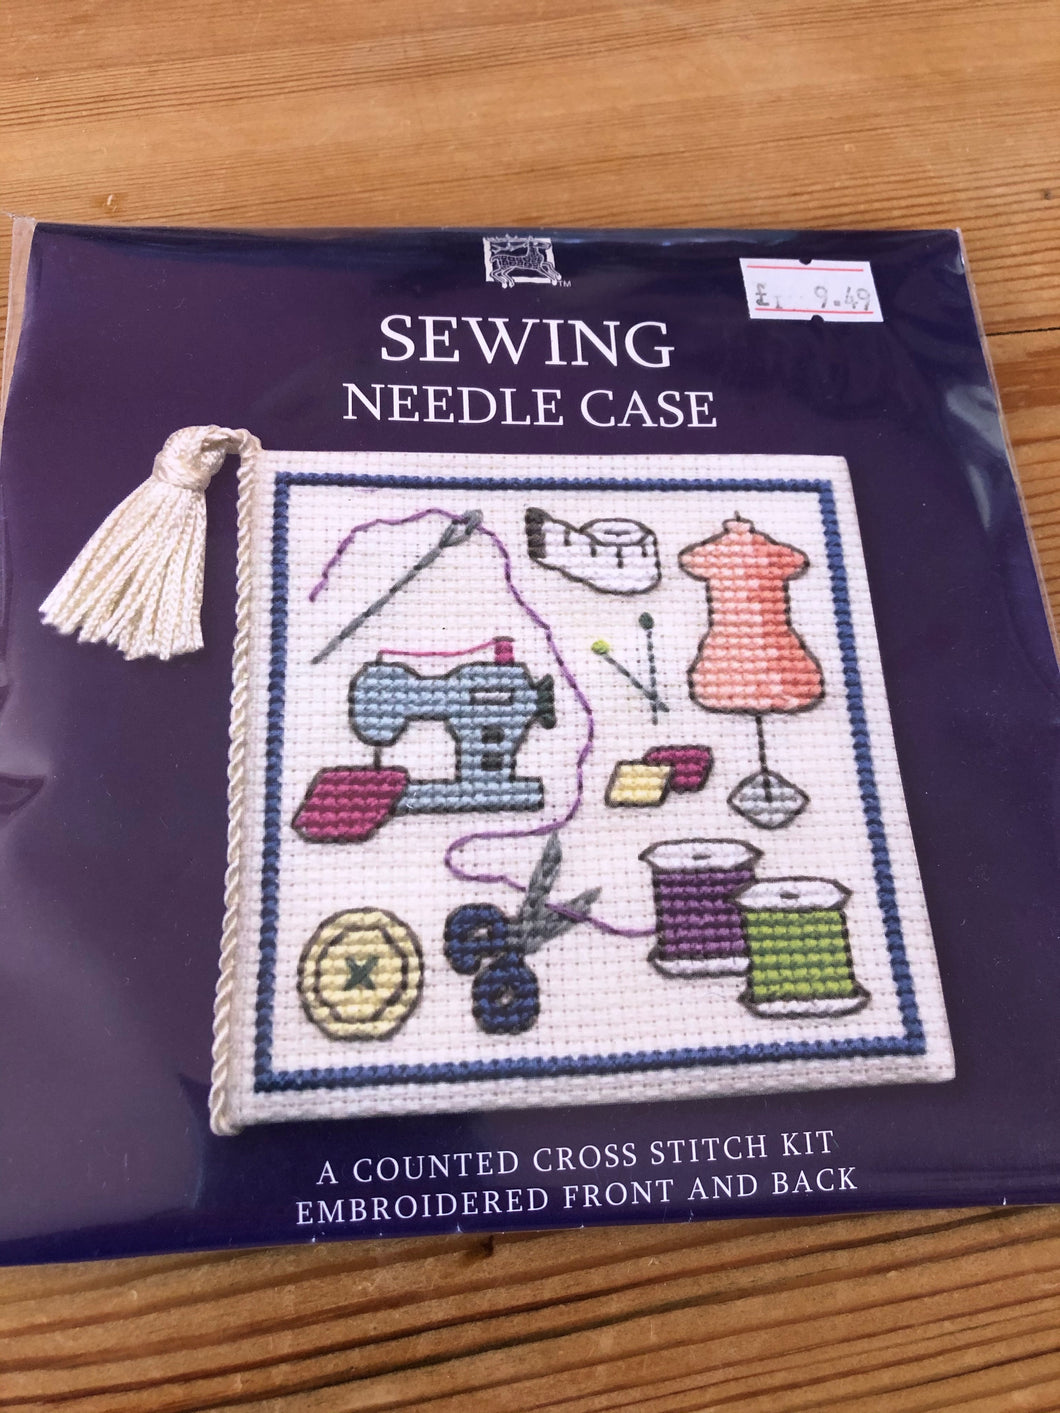 Cross stitch kit - sewing themed needle case